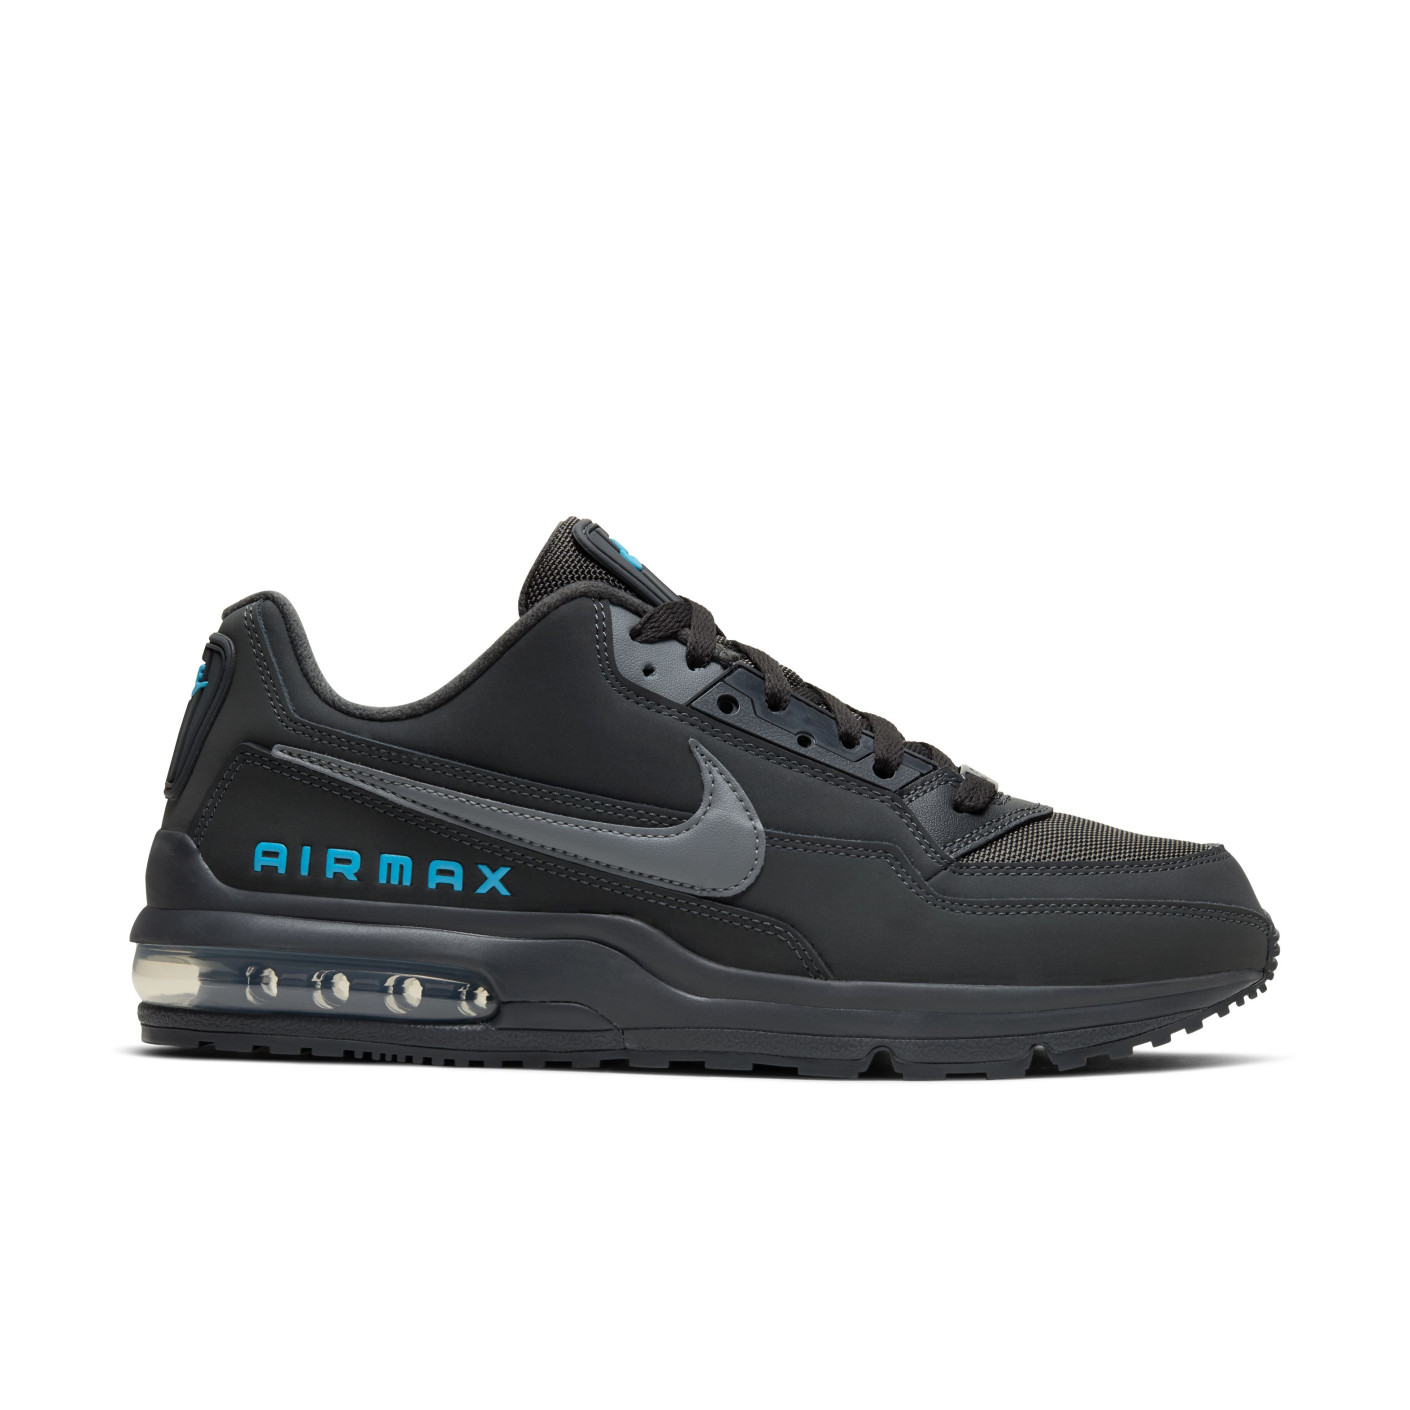 operatie hier Fjord Nike Air Max Limited 3 Sneakers Zwart Grijs Felblauw